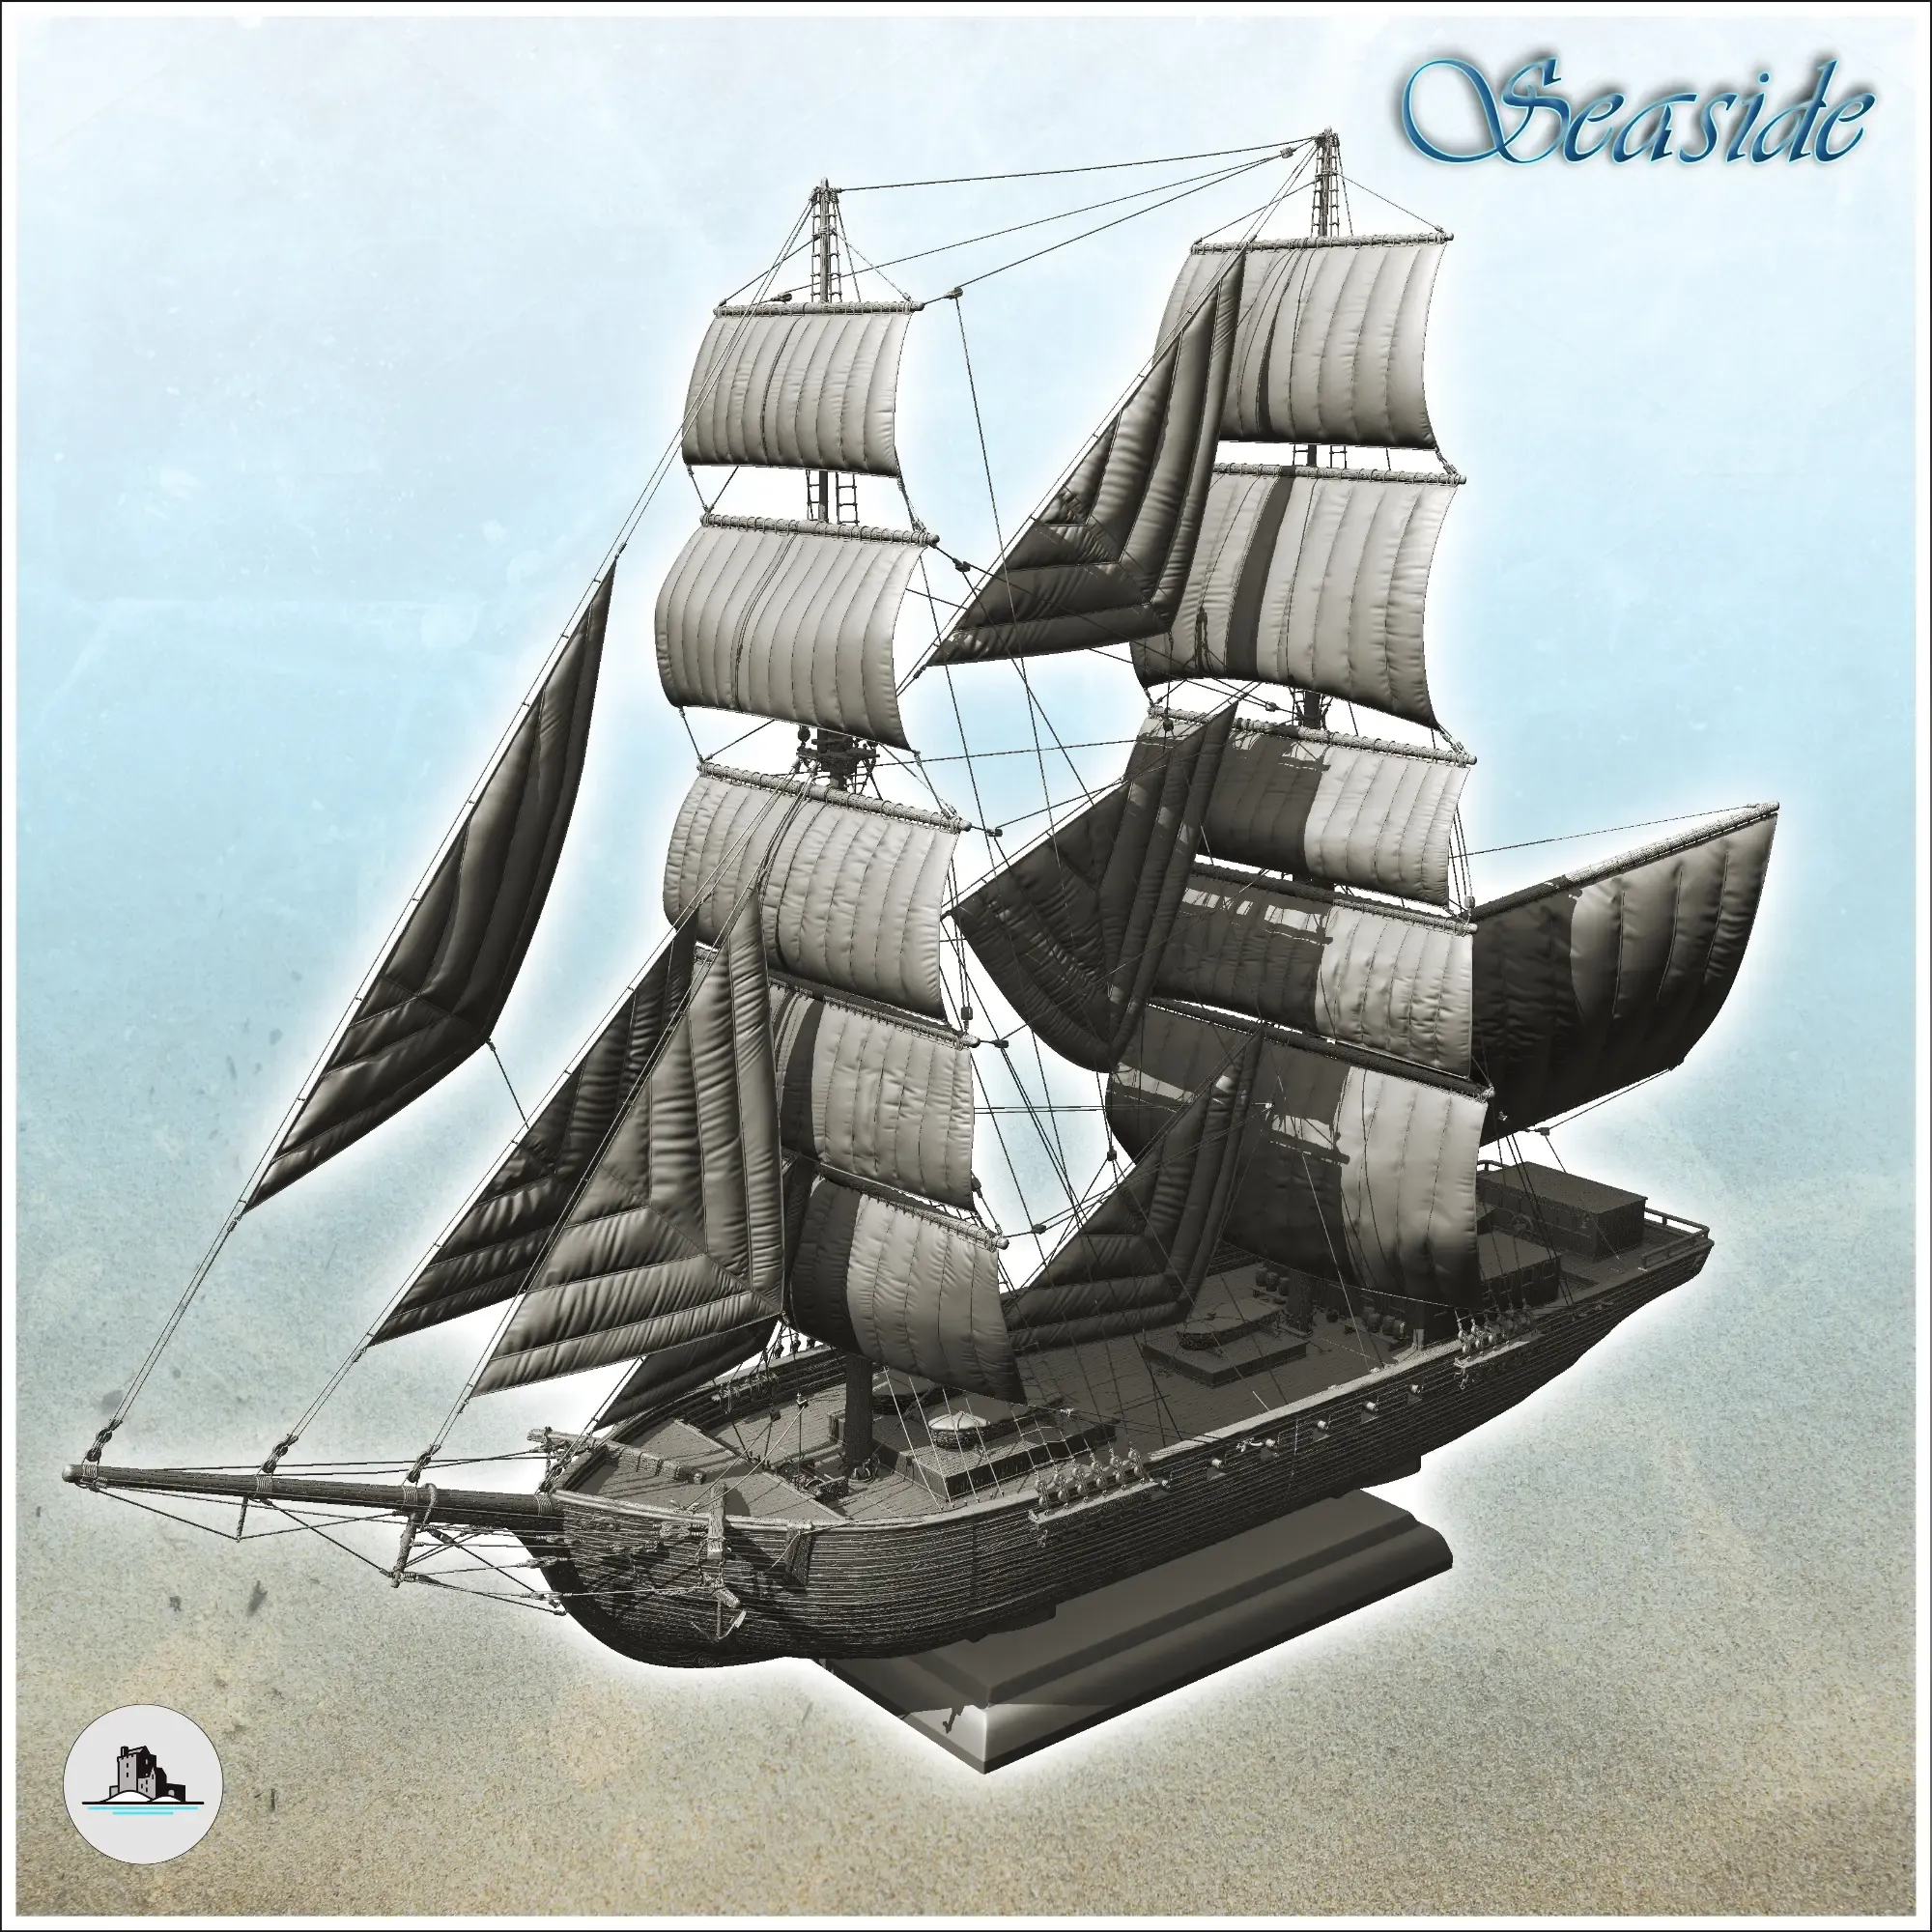 Brig sailing ship with two main masts - boat miniatures